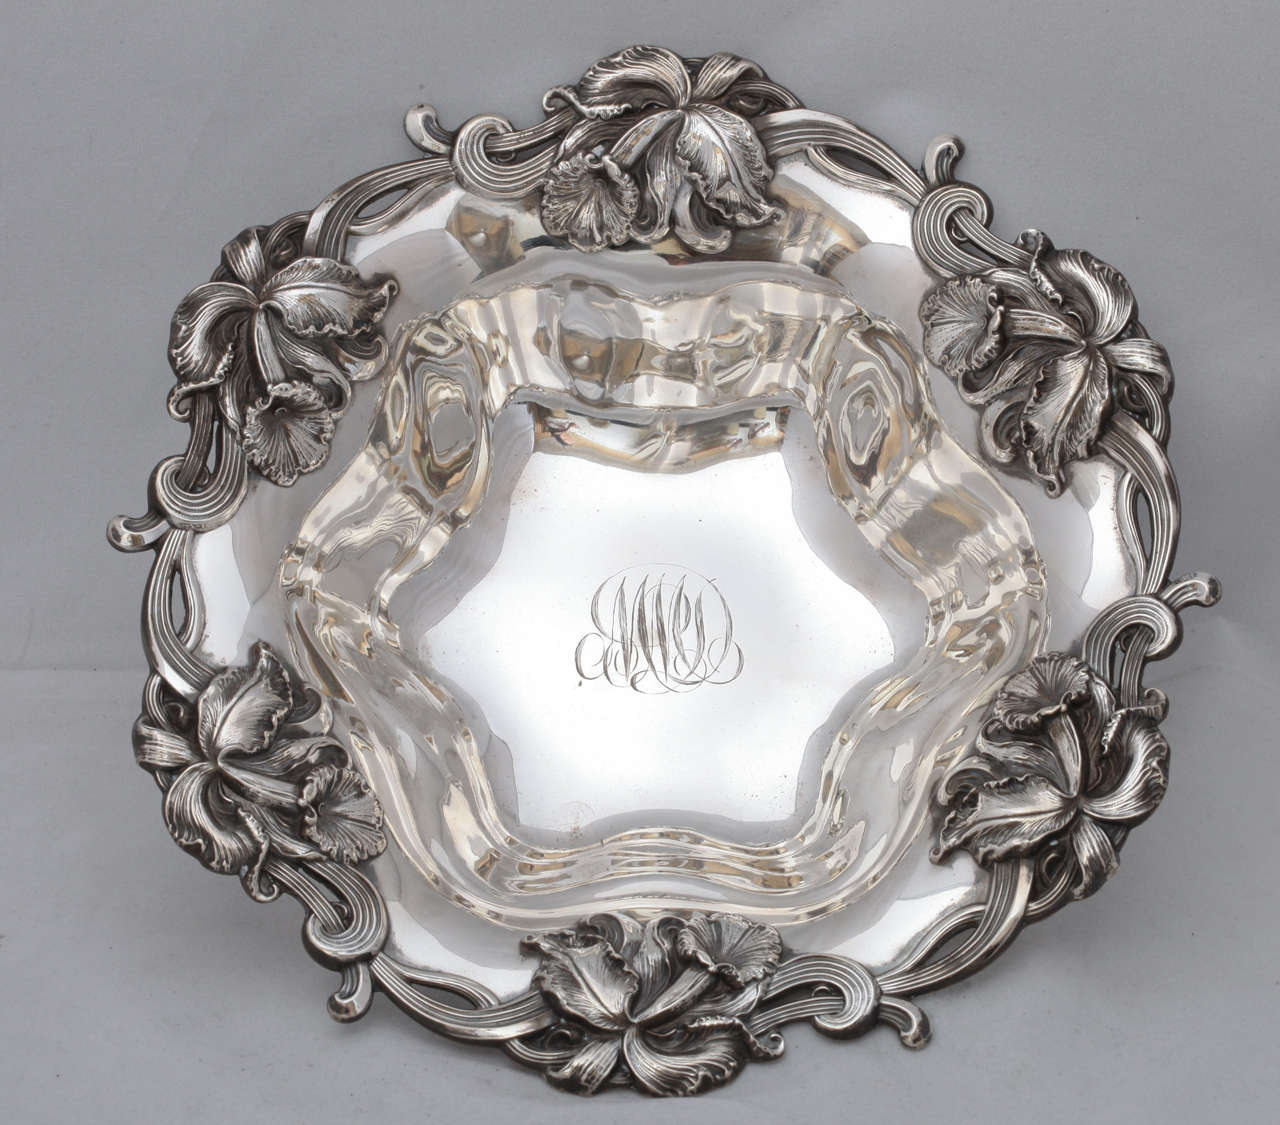 19th Century Art Nouveau Sterling Silver Centerpiece or Serving Bowl